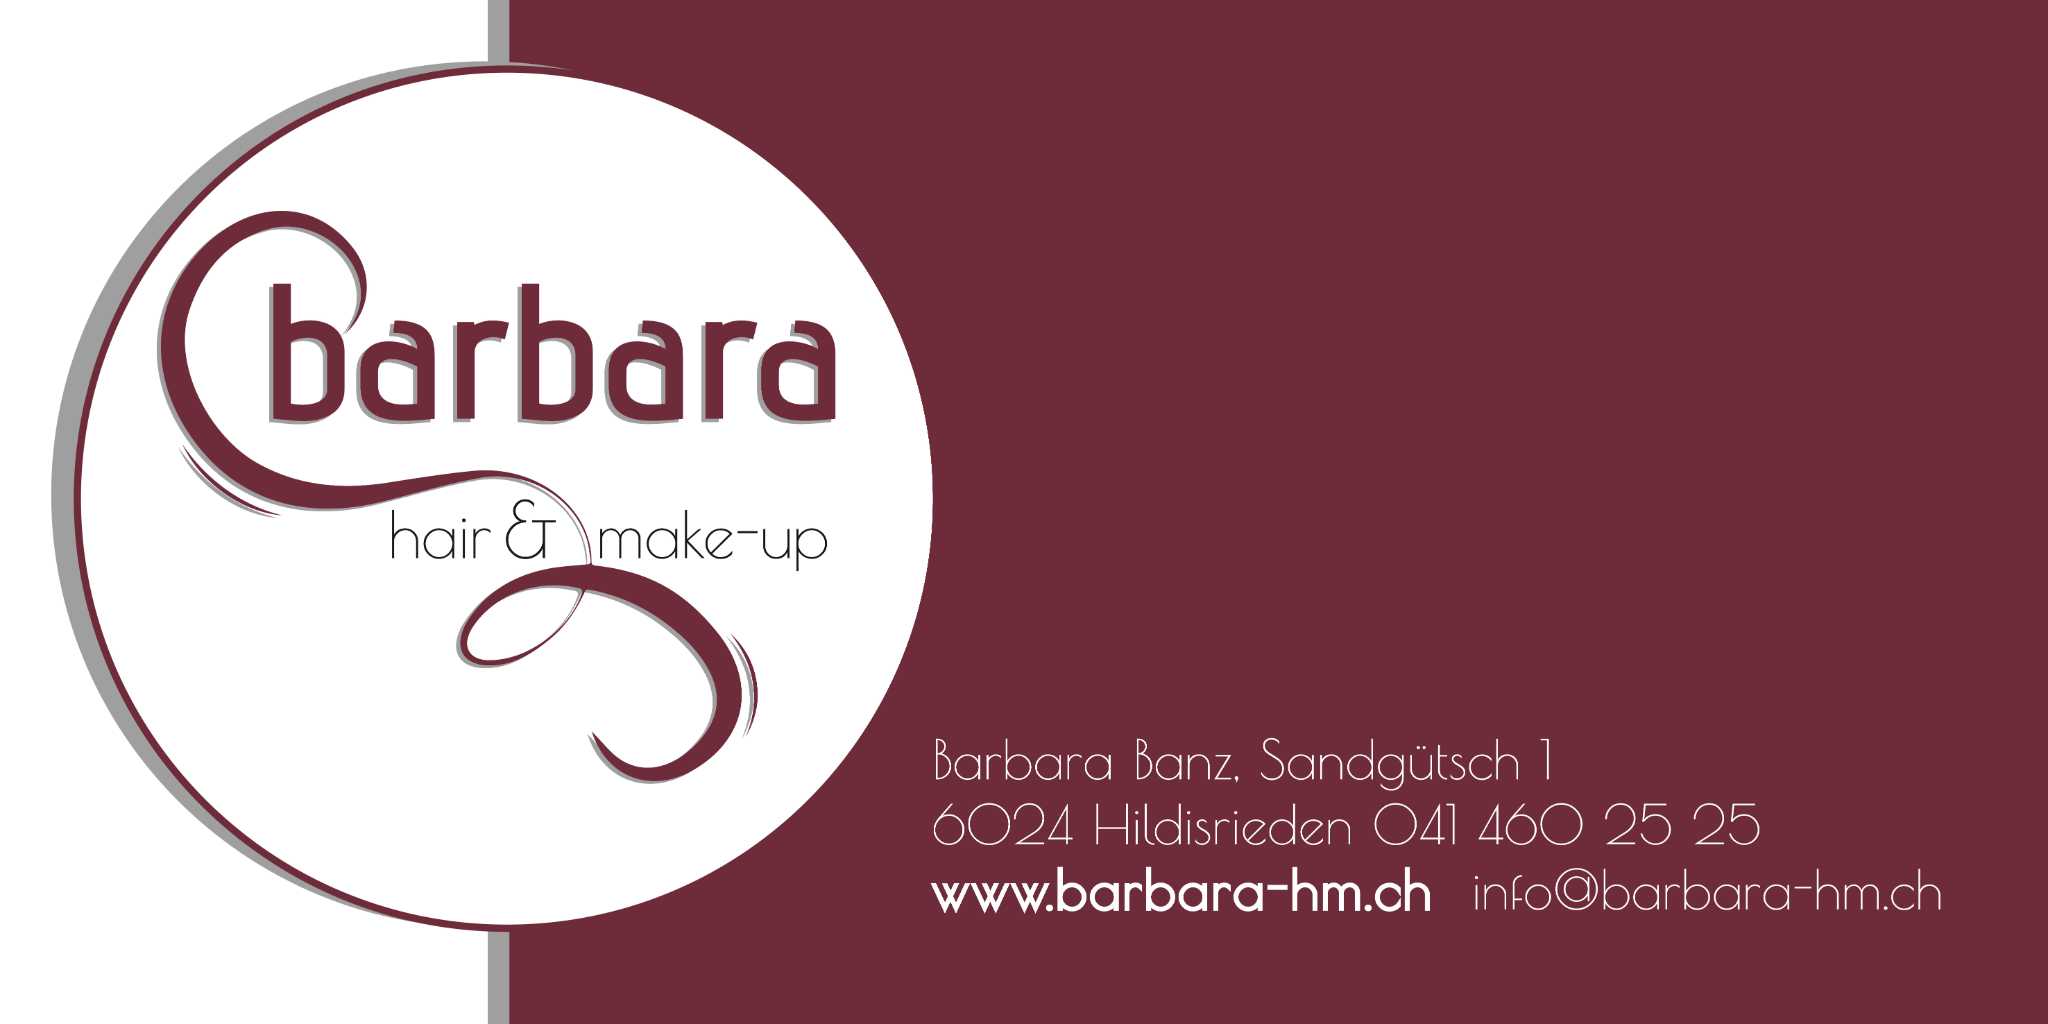 Barbara Hair & Make up